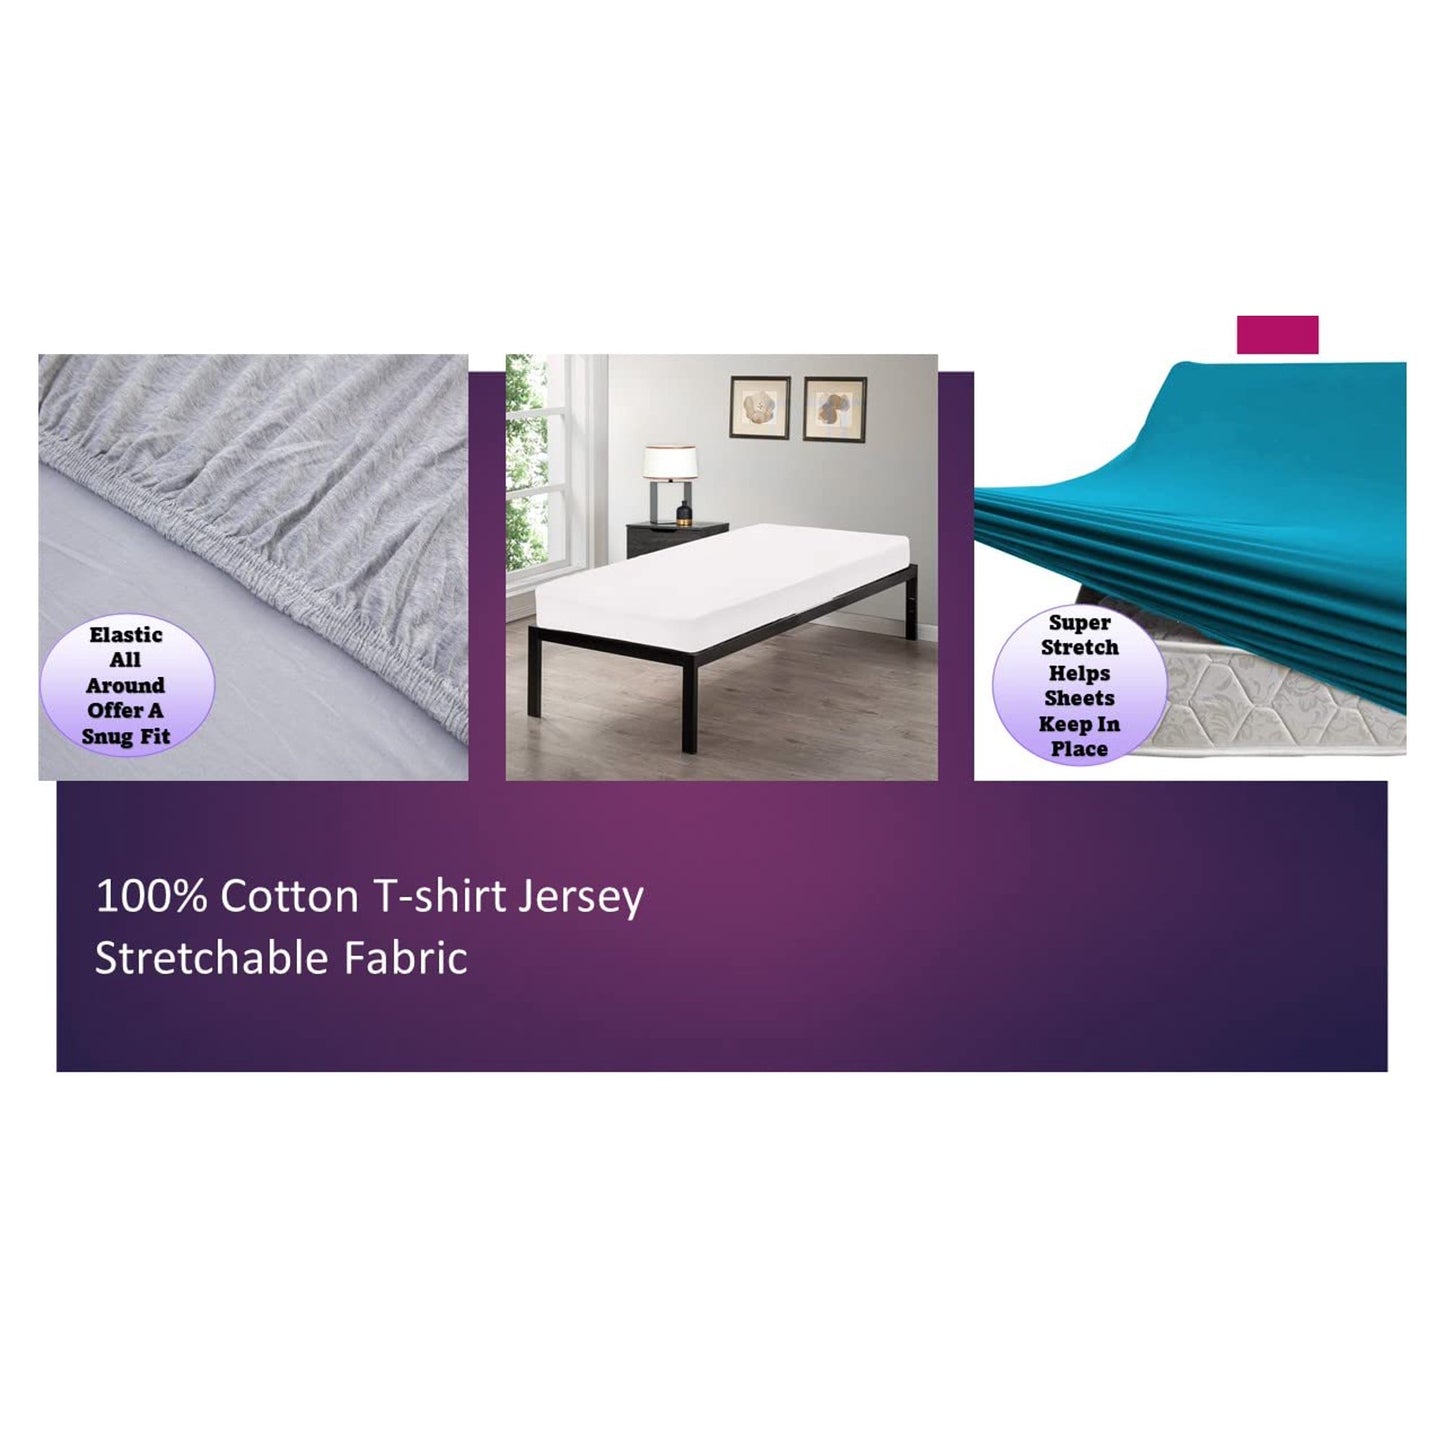 100% Combed T-Shirt Cotton Jersey Knit Camp Sheet Set, 1 Fitted cot Sheet, 1 Flat Sheet, 1 Standard Pillow case Twin Size 39X75, Lavender